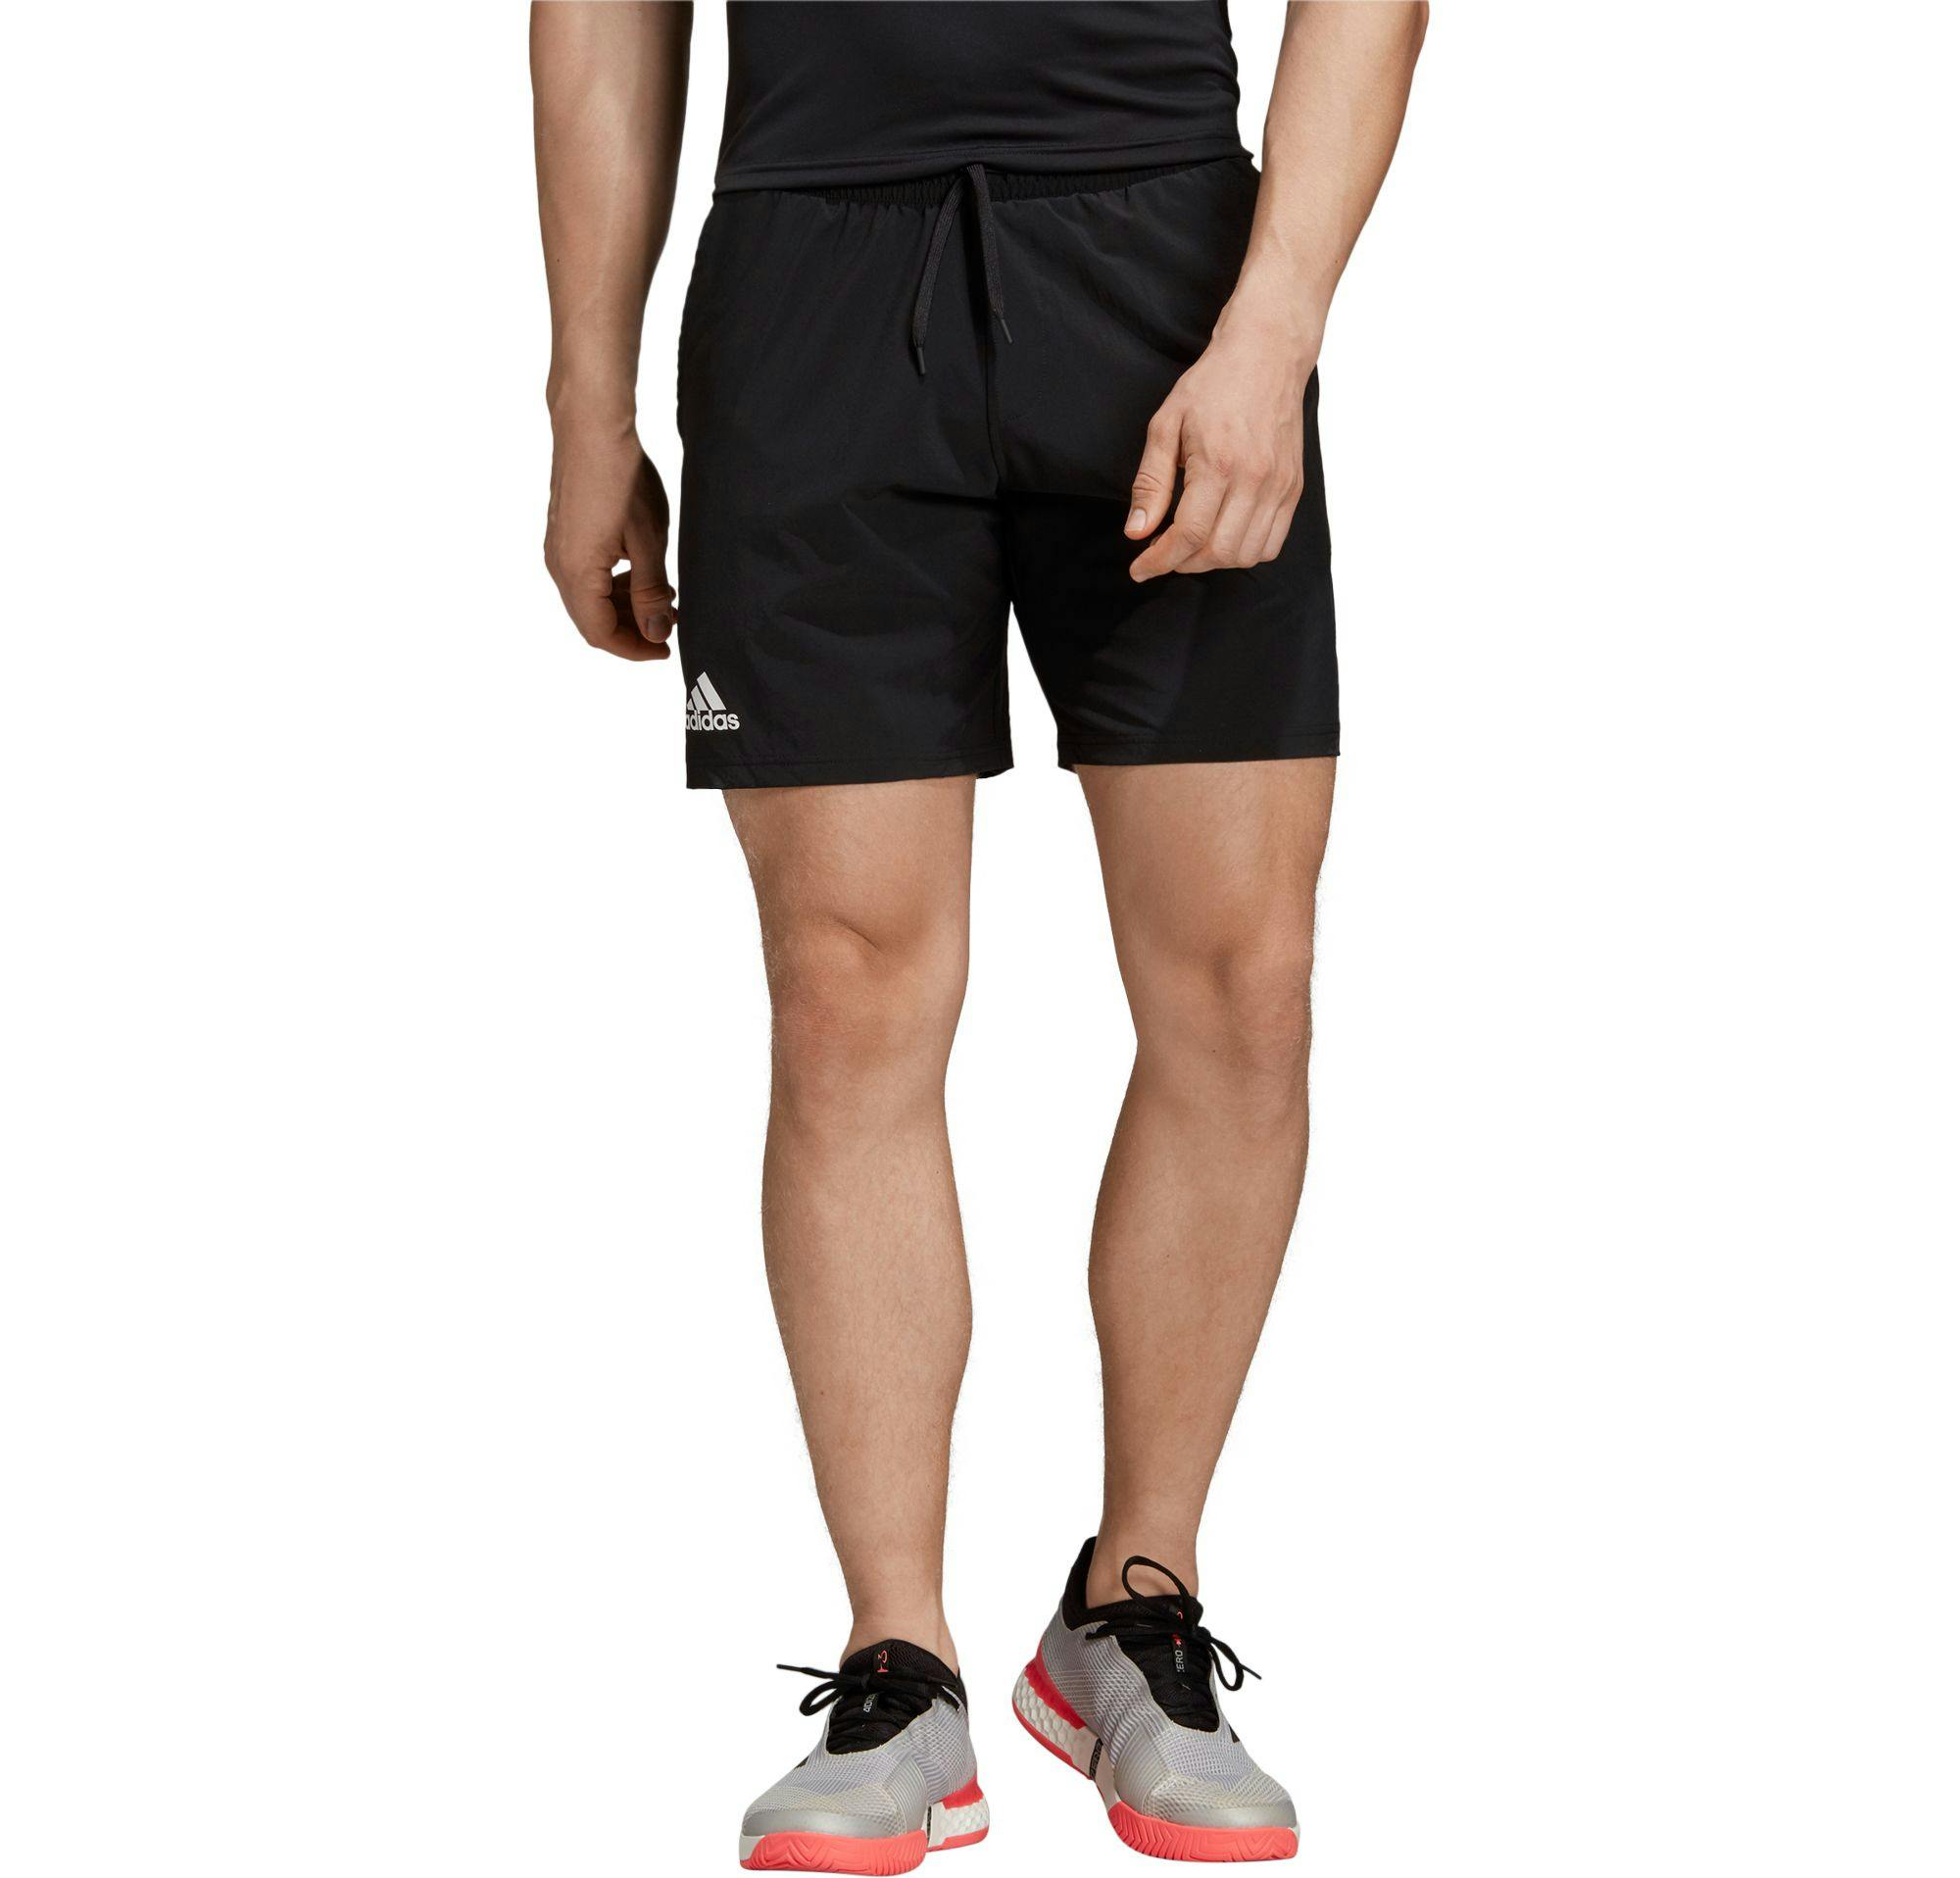 Adidas Men's Club Stretch Woven 9in Tennis Shorts